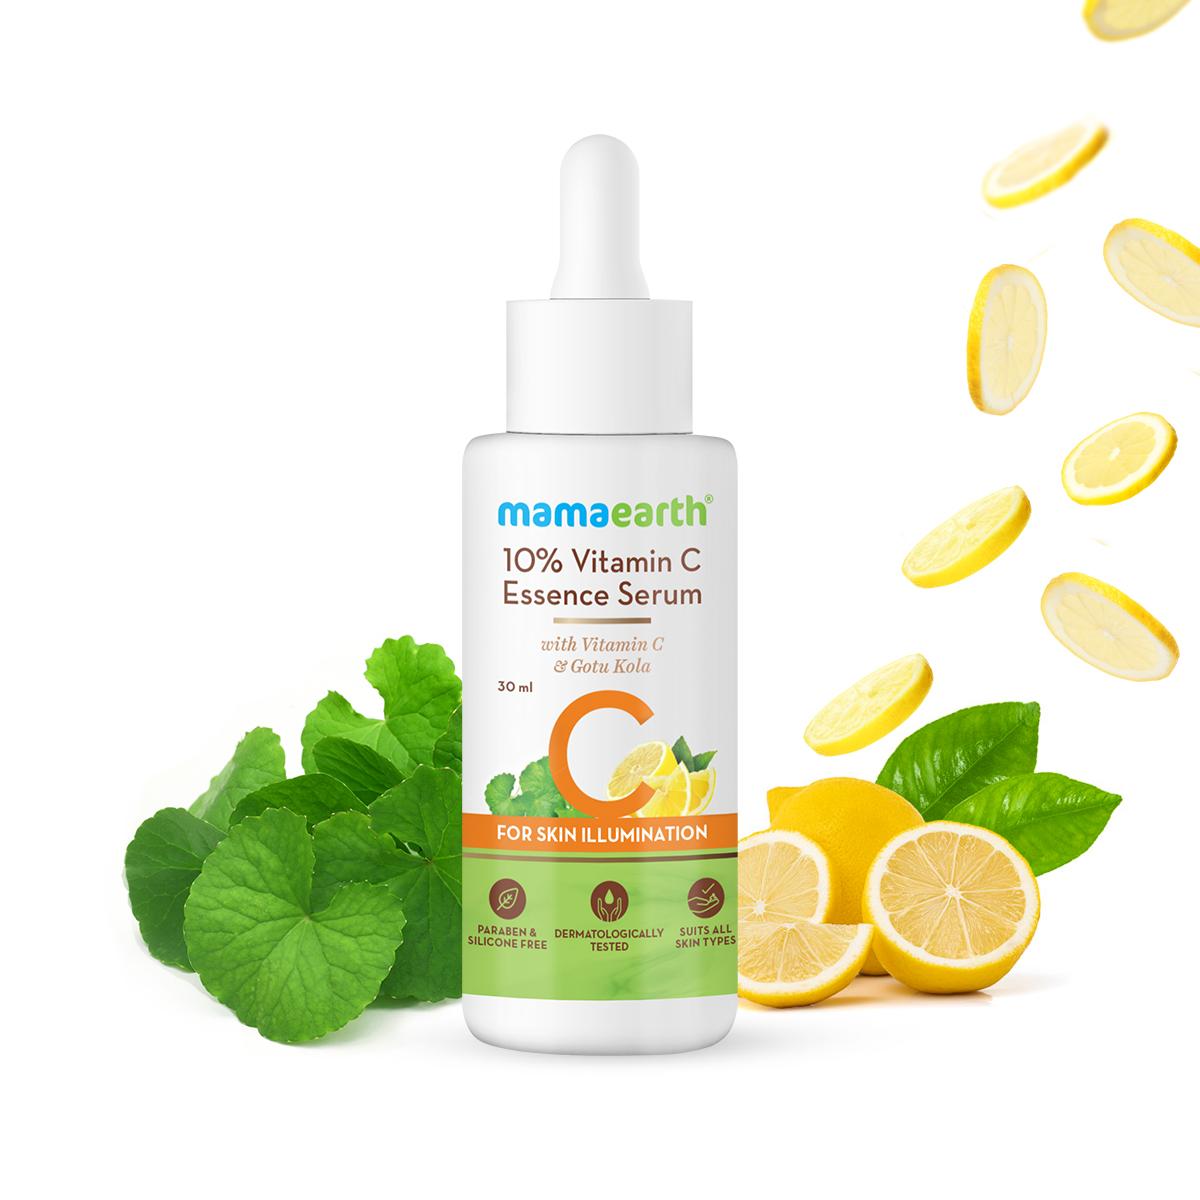 10% vitamin c essence serum with vitamin c and gotu kola for skin illumination – 30ml